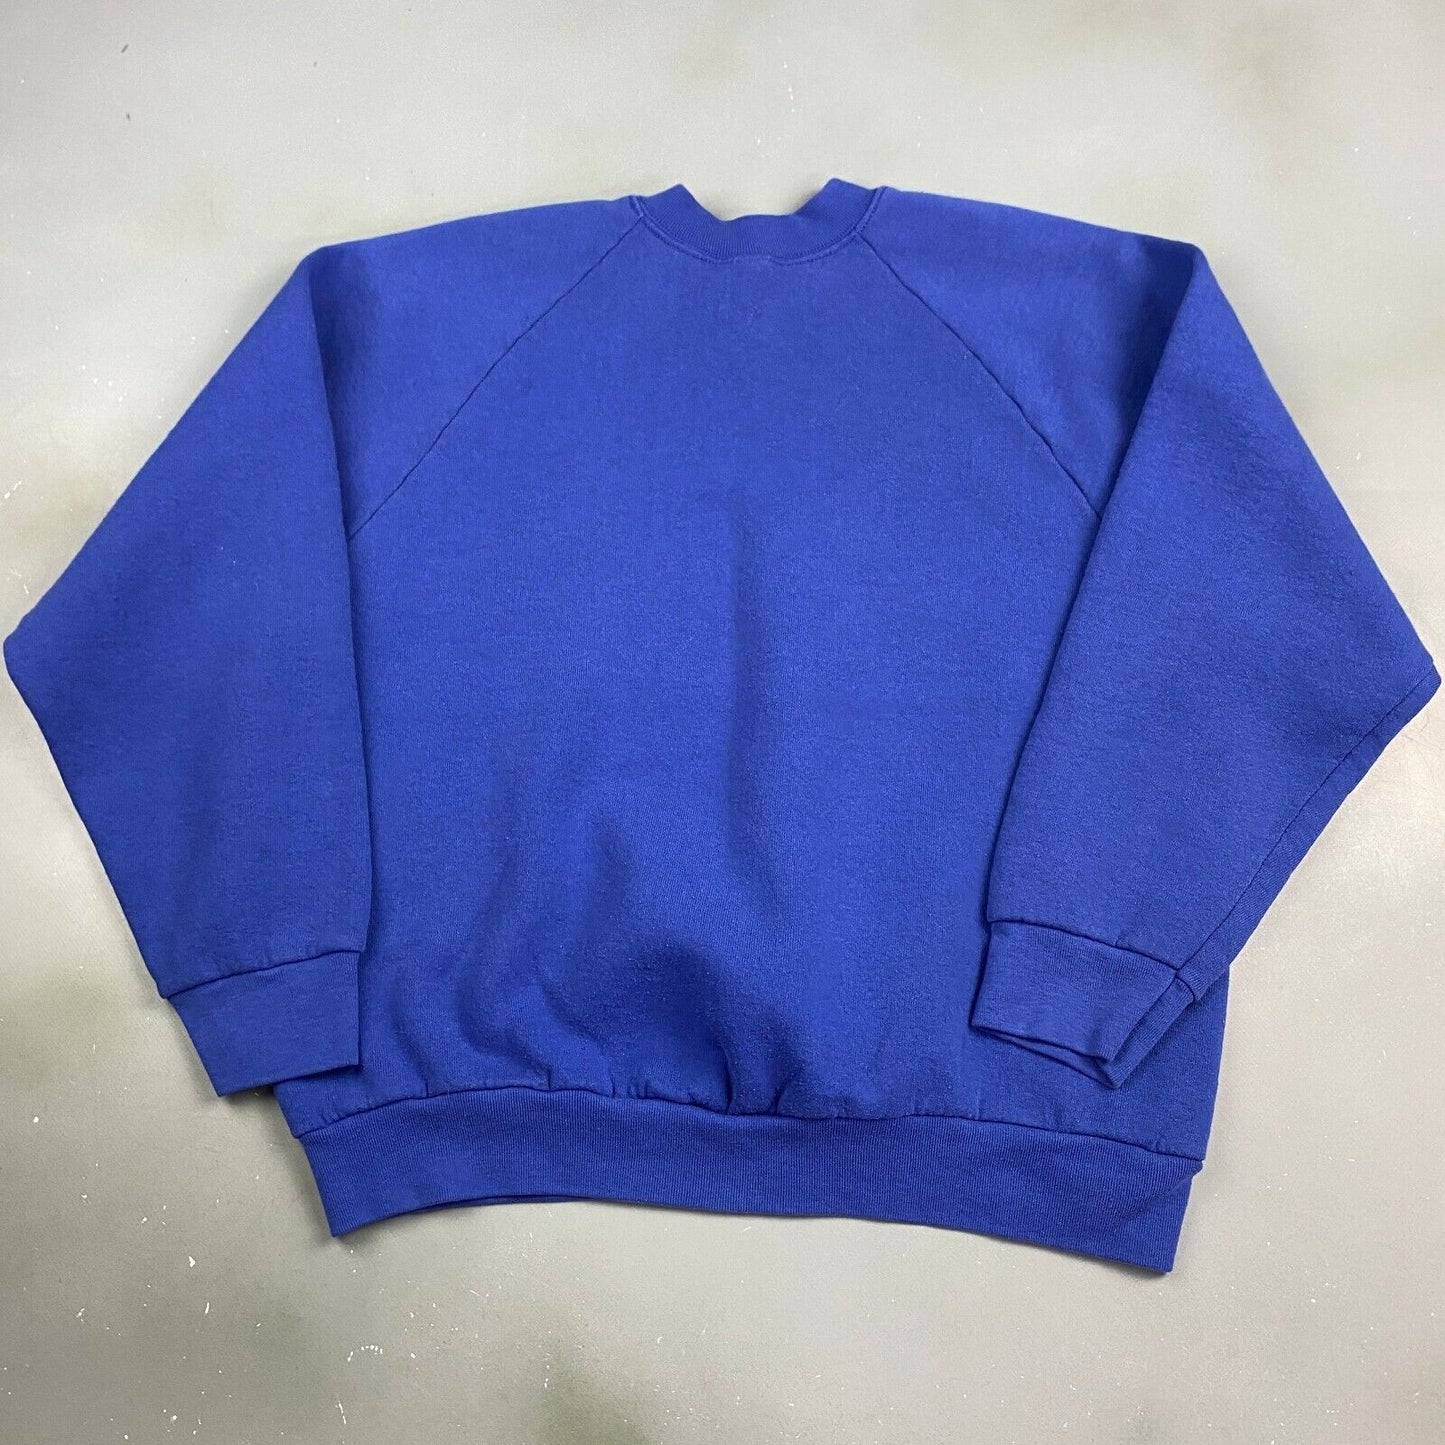 VINTAGE 90s Blank Blue Crewneck Sweater sz Large Adult